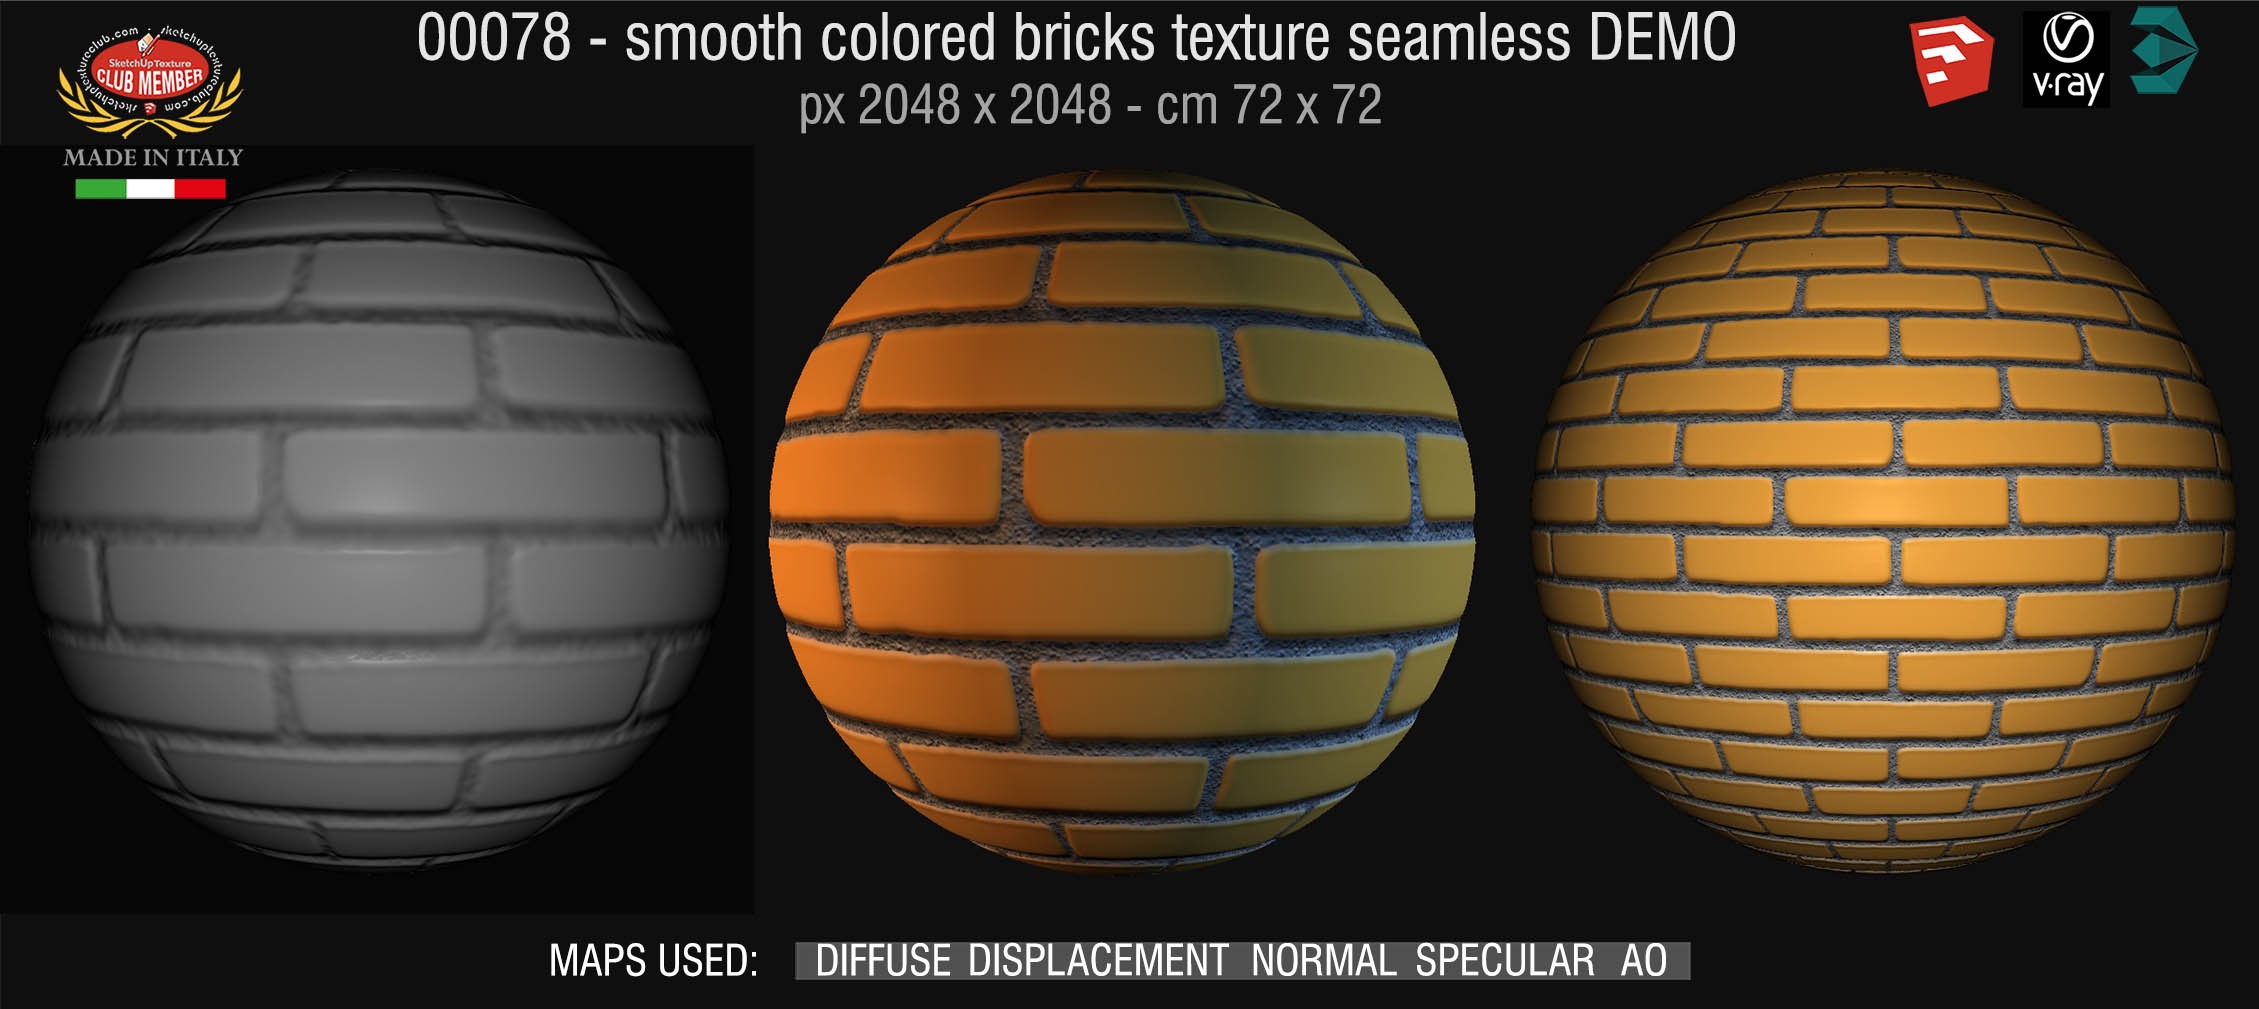 00078 smooth colored bricks texture seamless + maps DEMO